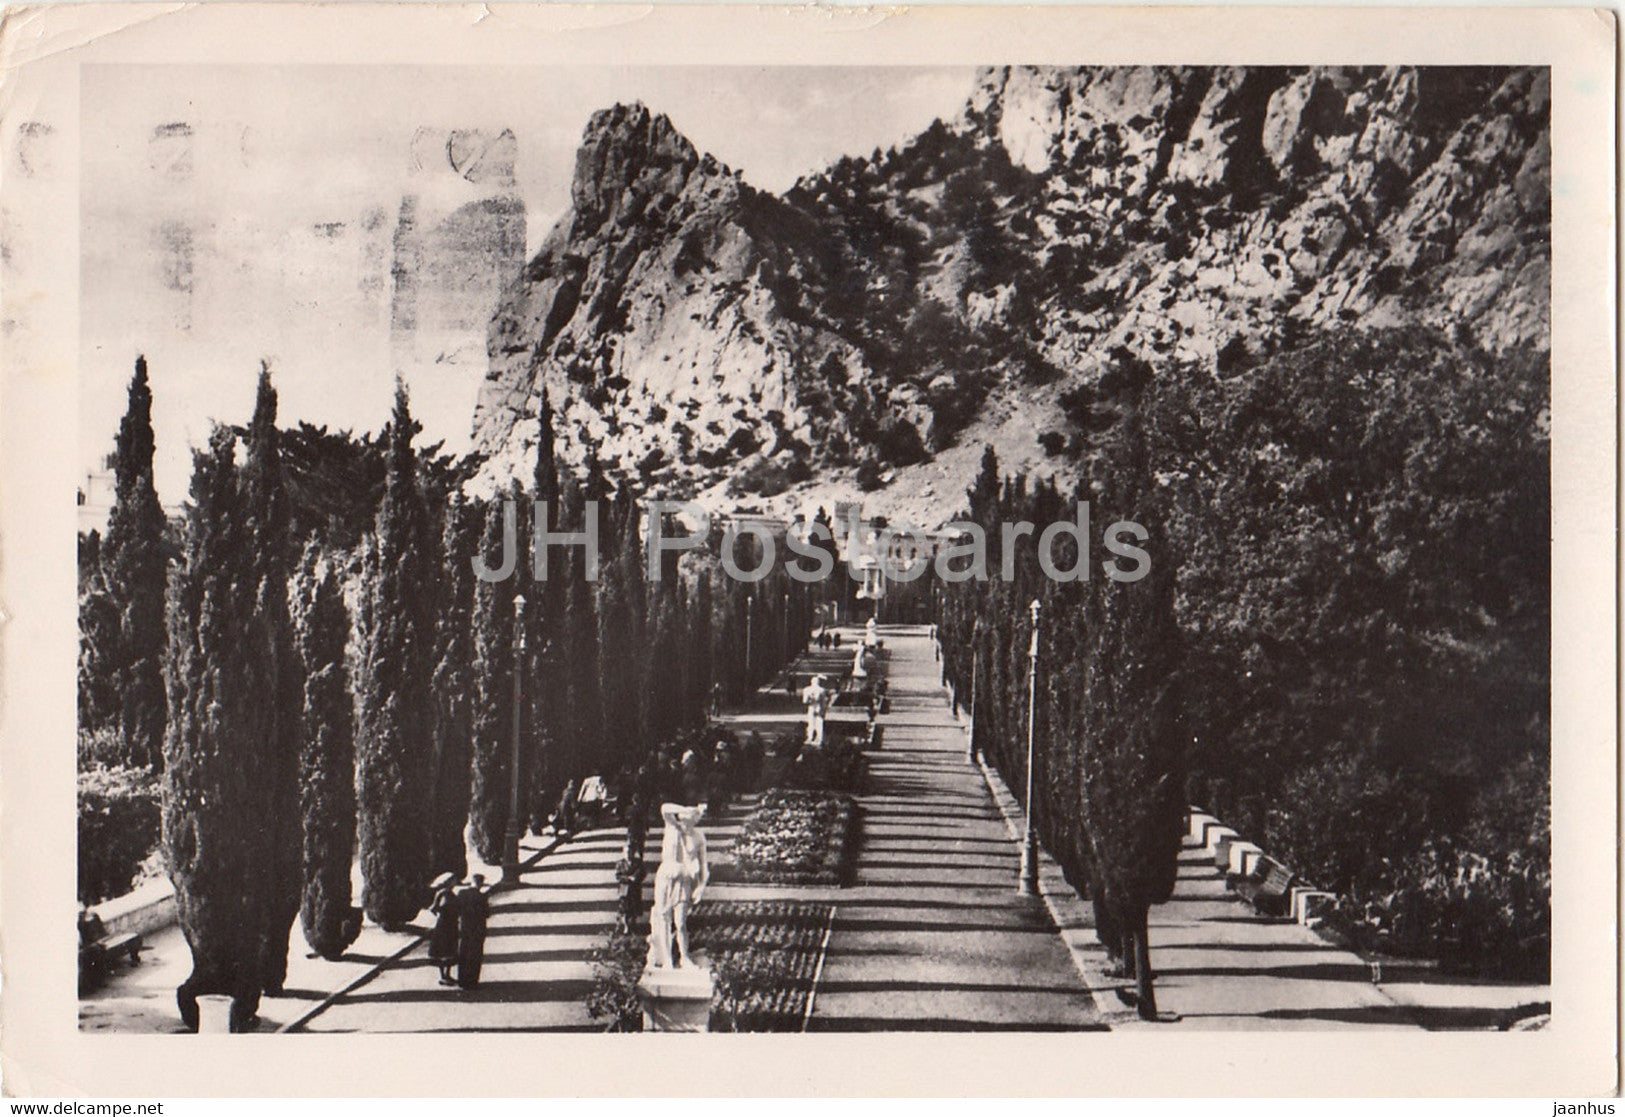 Simeiz - prospekt - Koshka hill - Crimea - 1959 - Ukraine USSR - used - JH Postcards